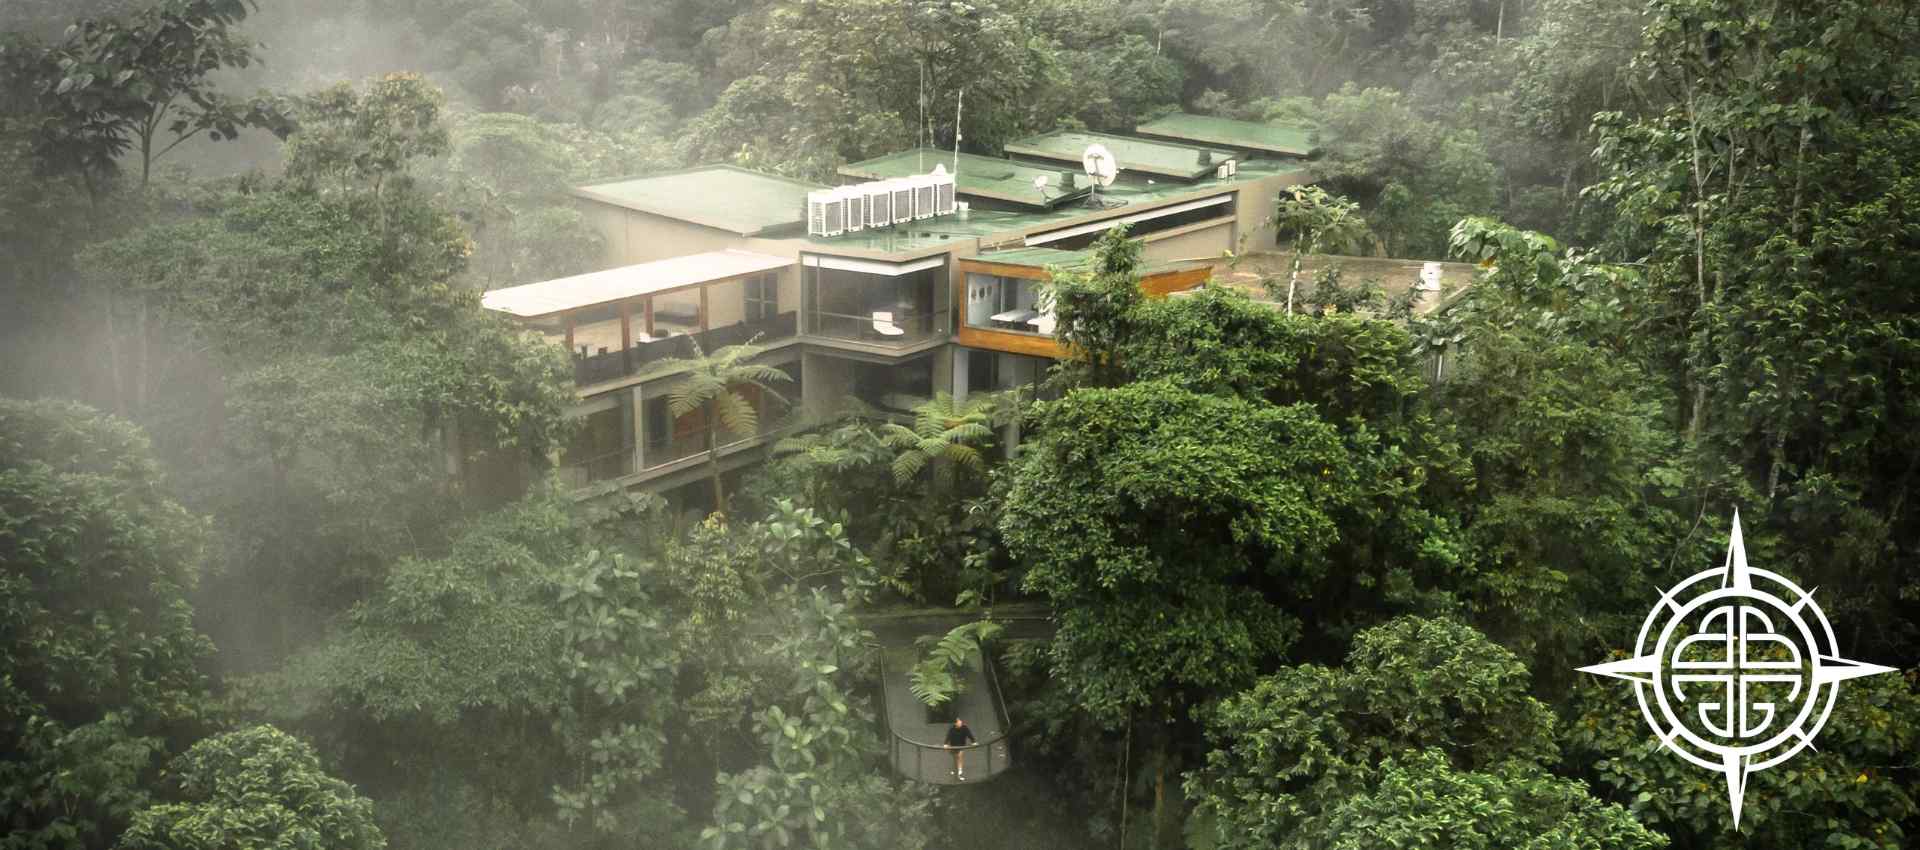 Mashpi Lodge Resort in the Amazon Rainforest | BuDhaGirl